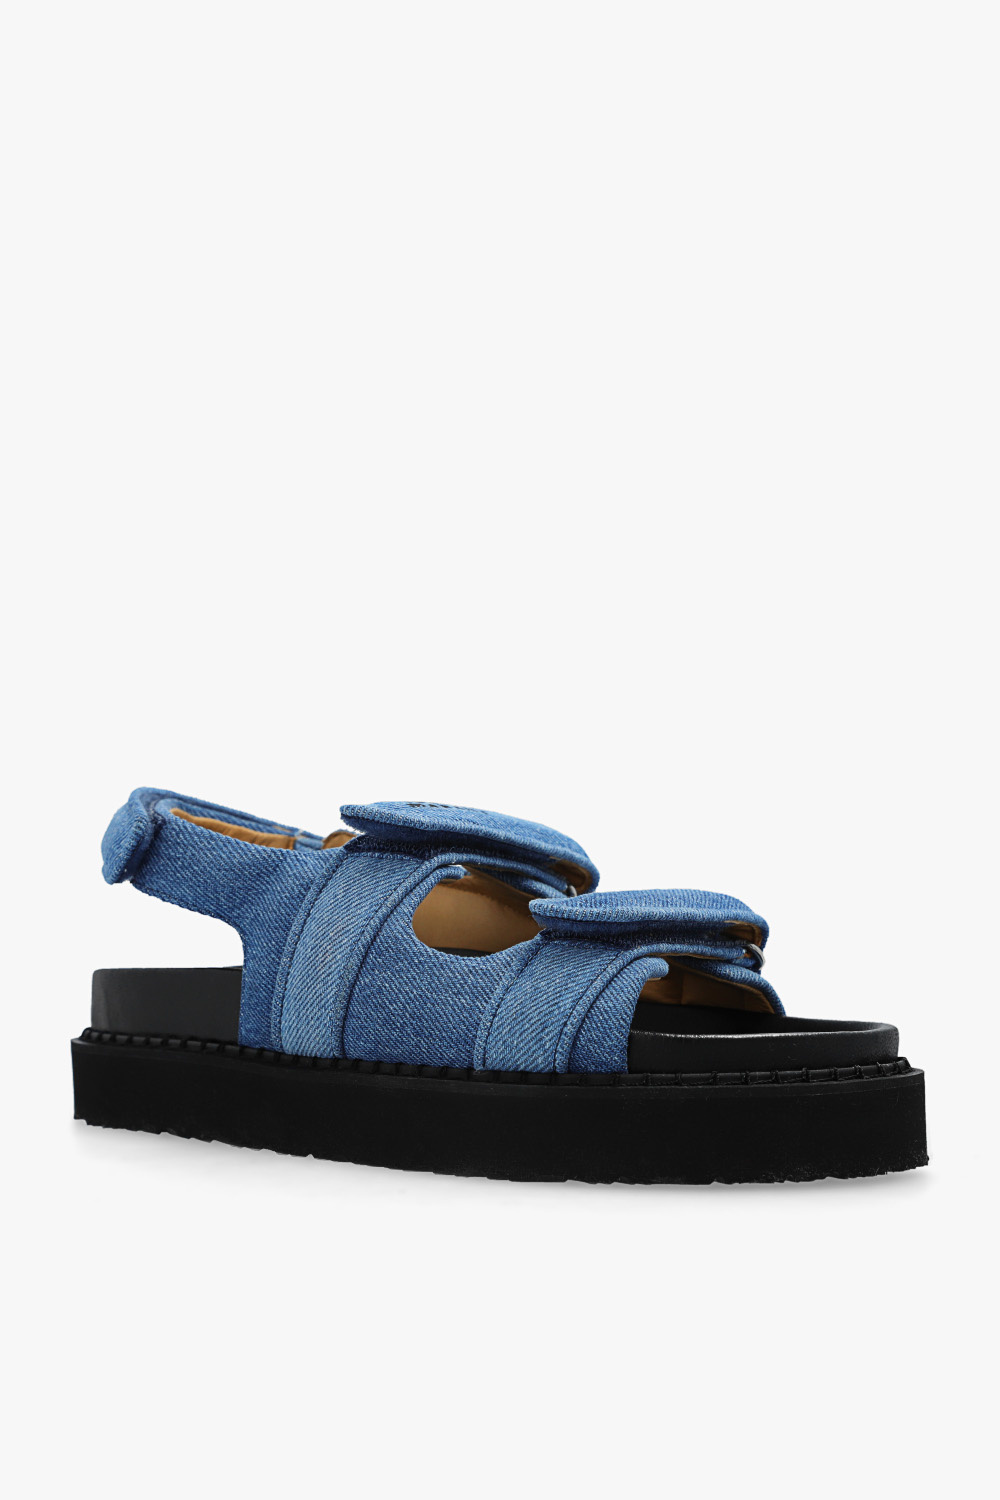 BILL Slipper with Velcro Fastener - Blue/Multicoloured